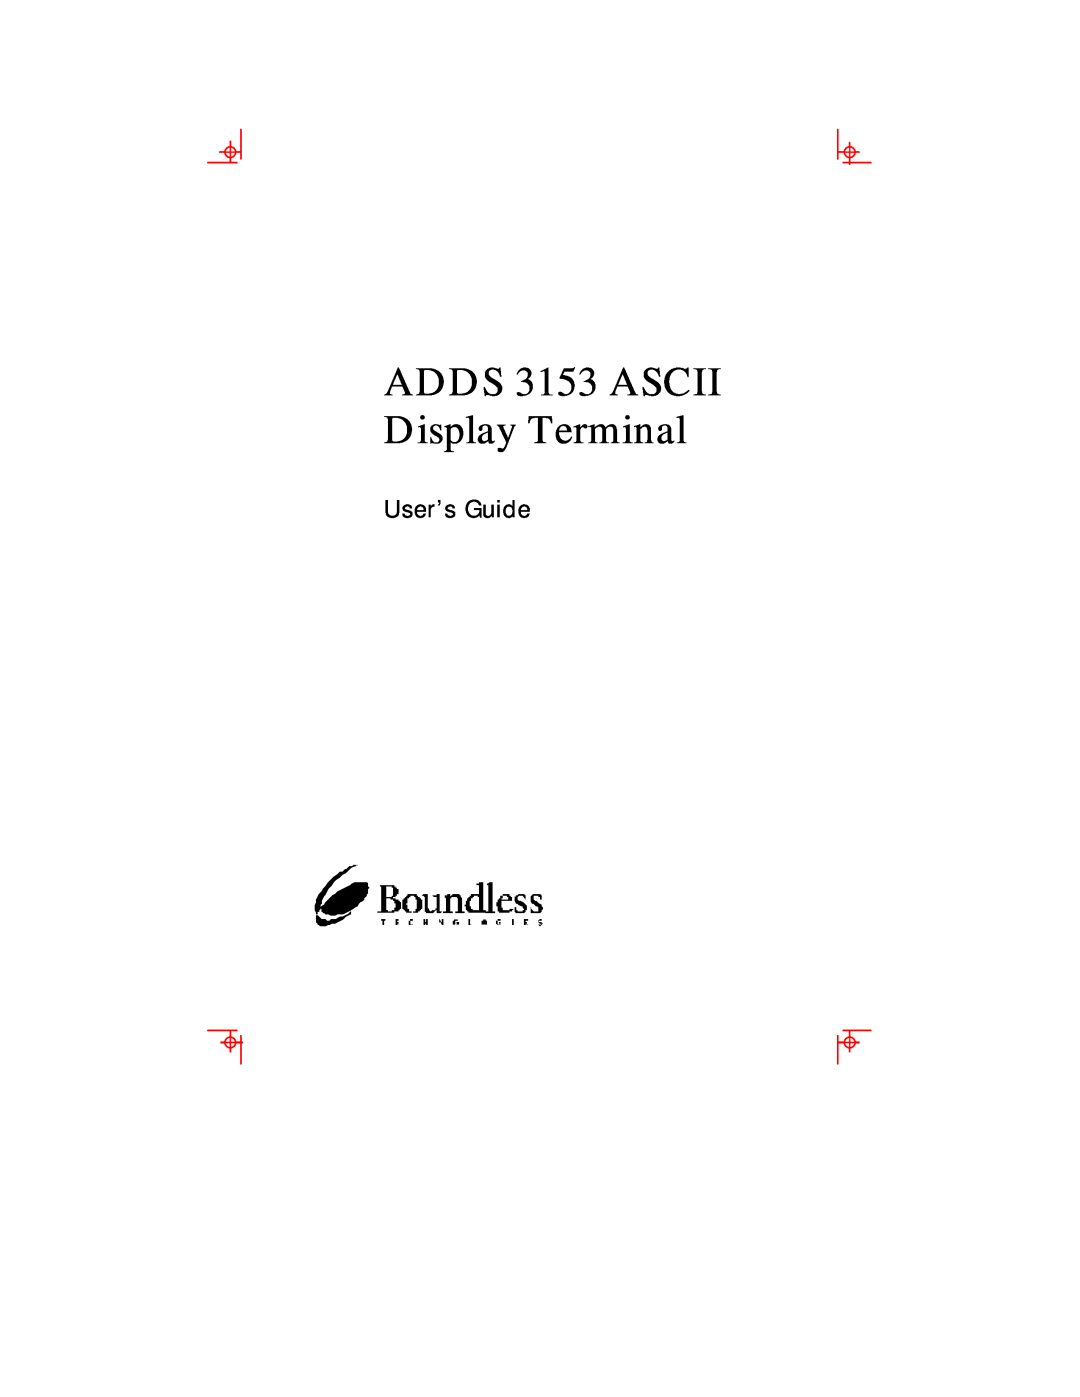 Boundless Technologies manual ADDS 3153 ASCII Display Terminal, User’s Guide 